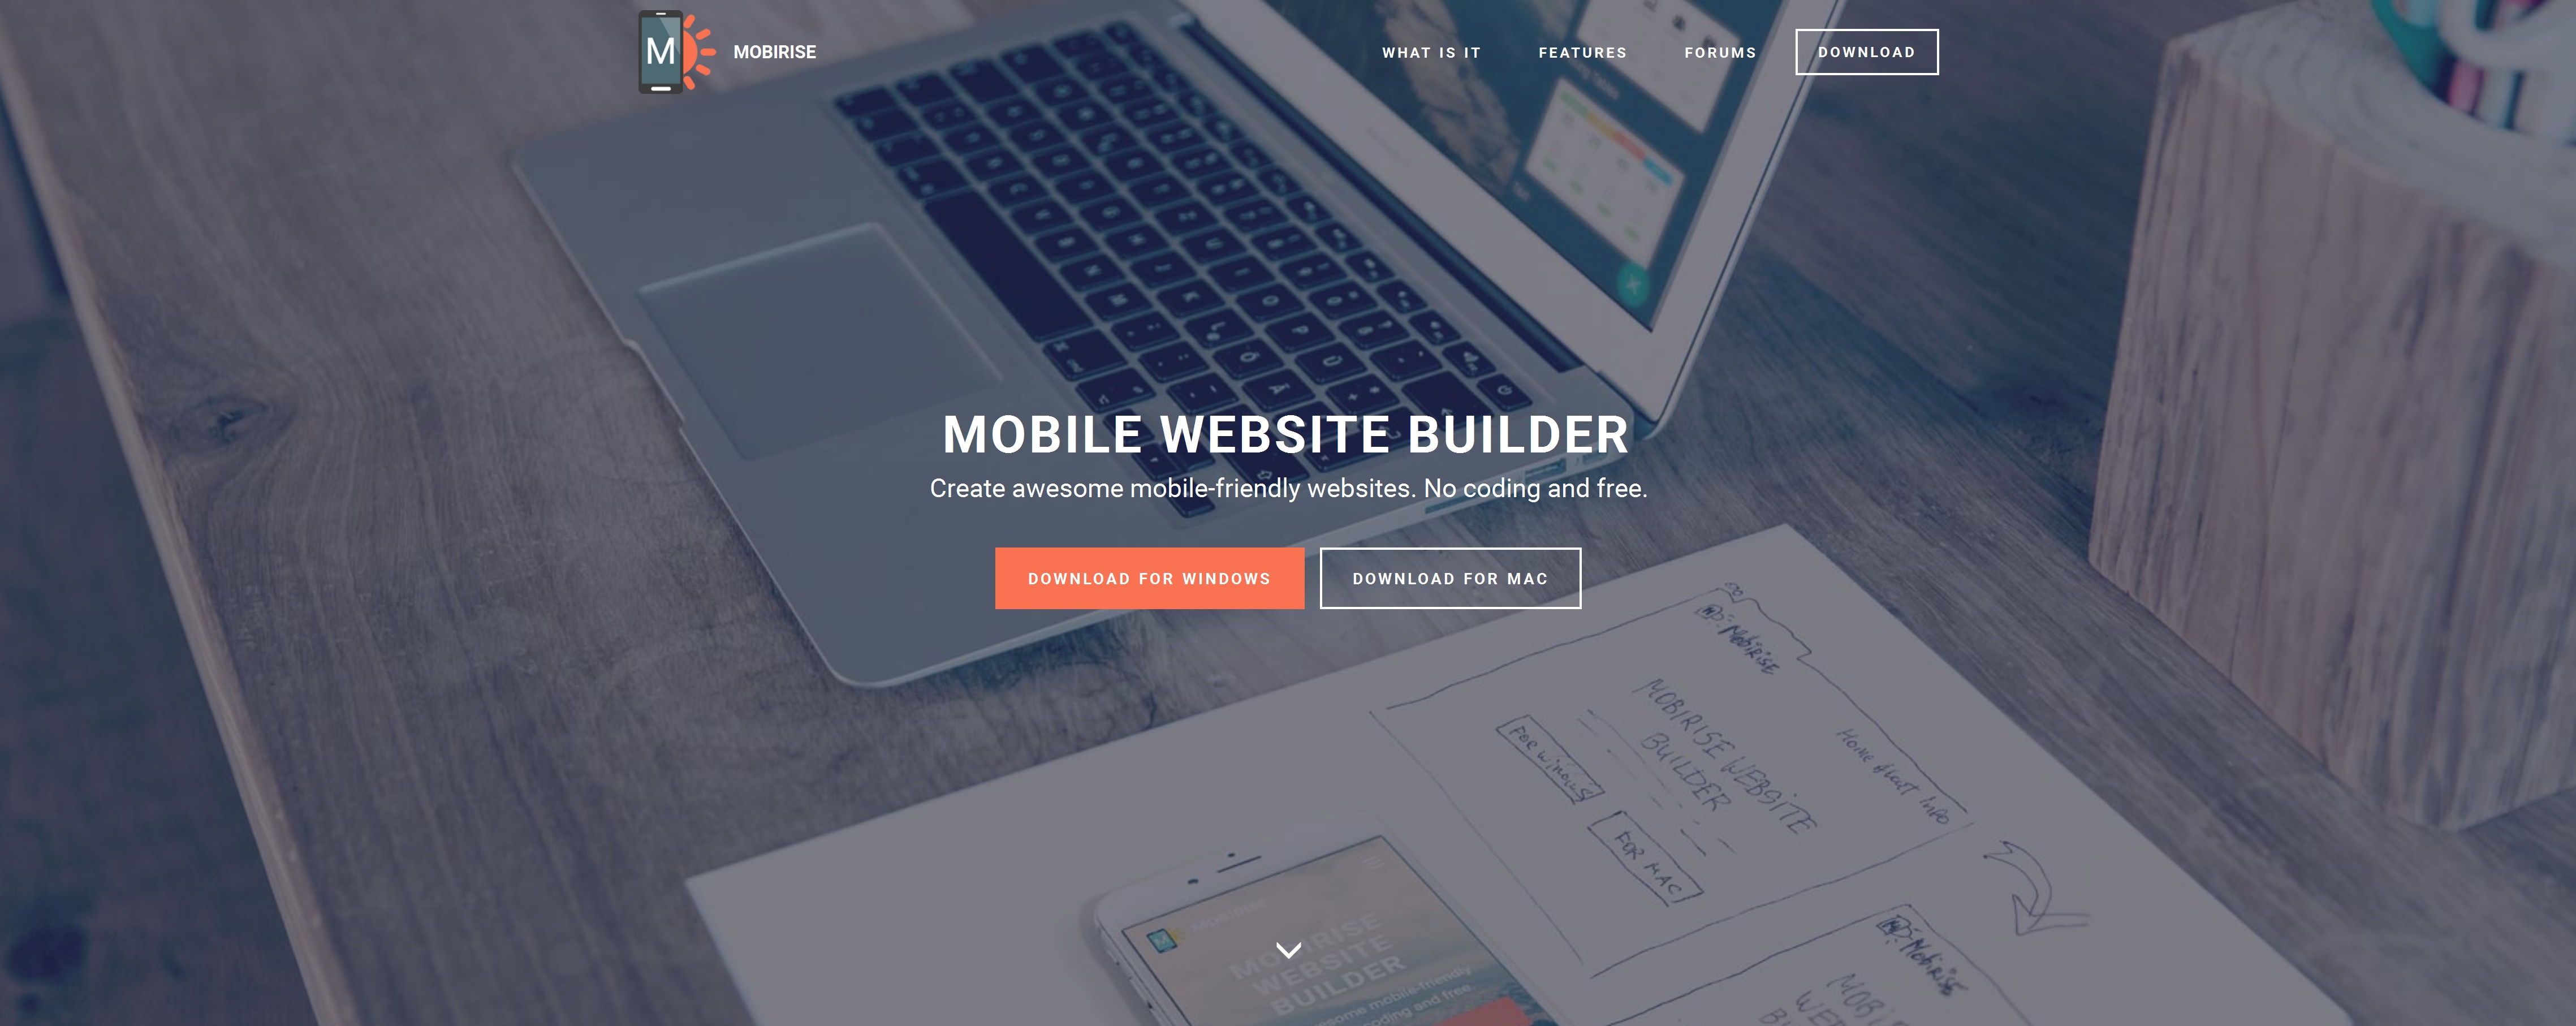 WYSIWYG Mobile Website Builder Software